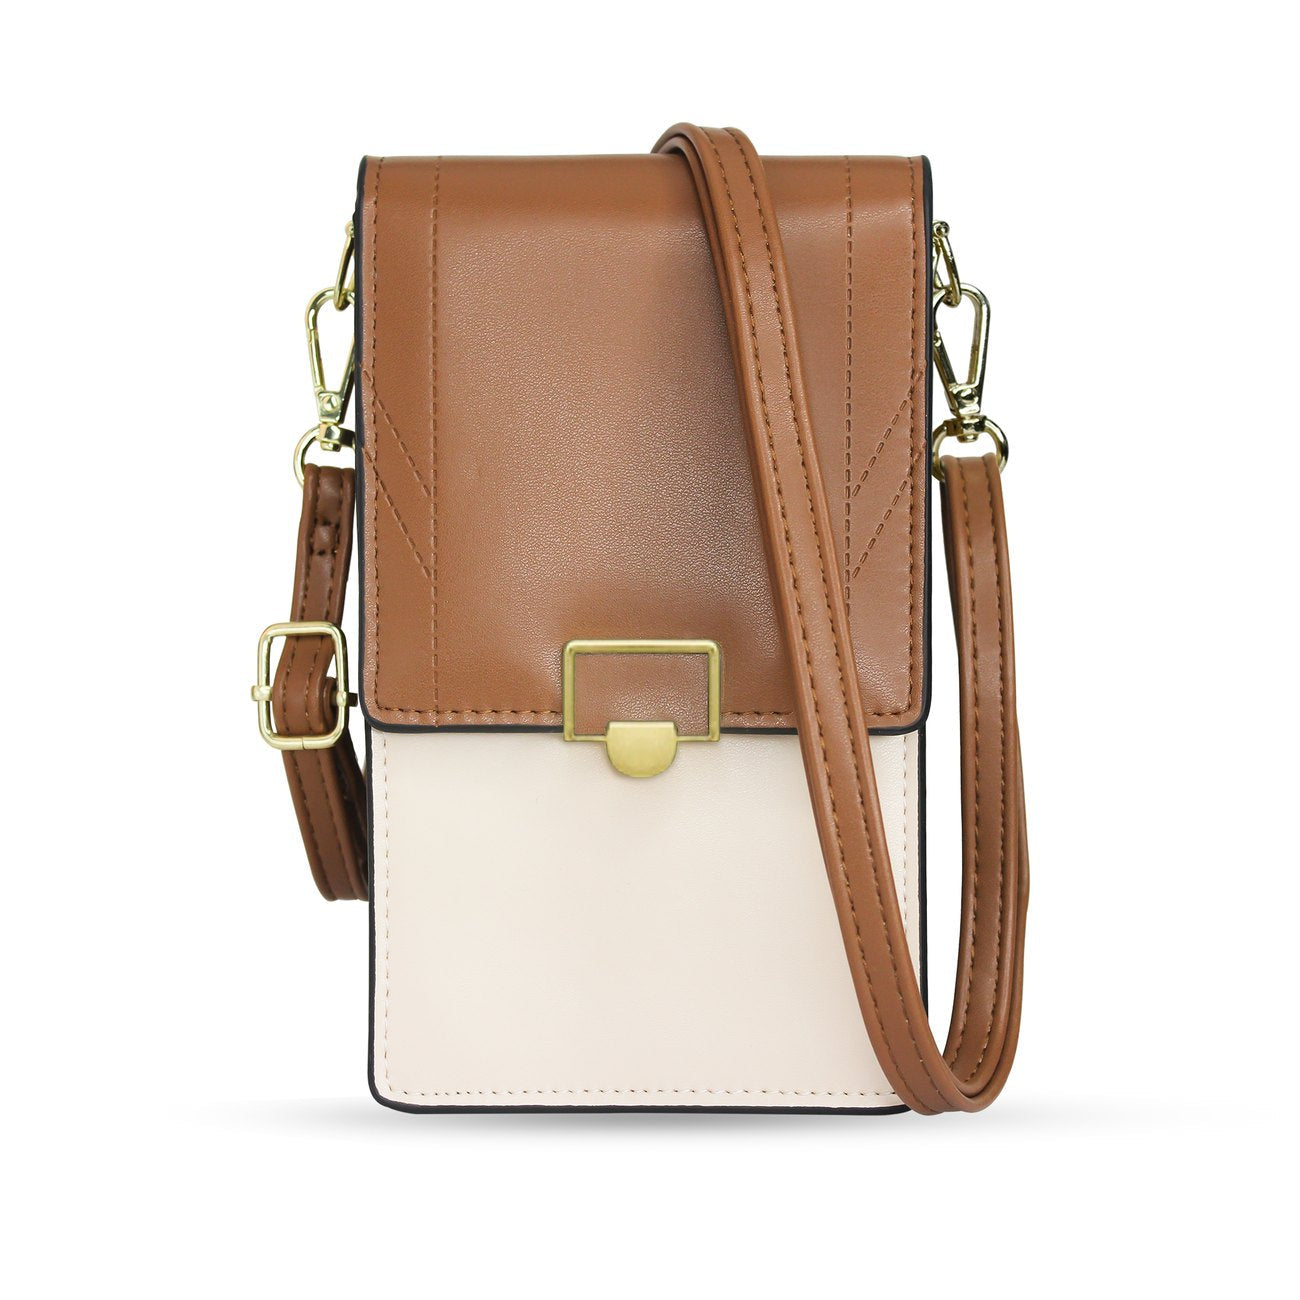 Fancy Bag Case Handmade Pouch High Quality Bag Smartphone Purse with Shoulder Strap Wallet Light Brown (Model 2)